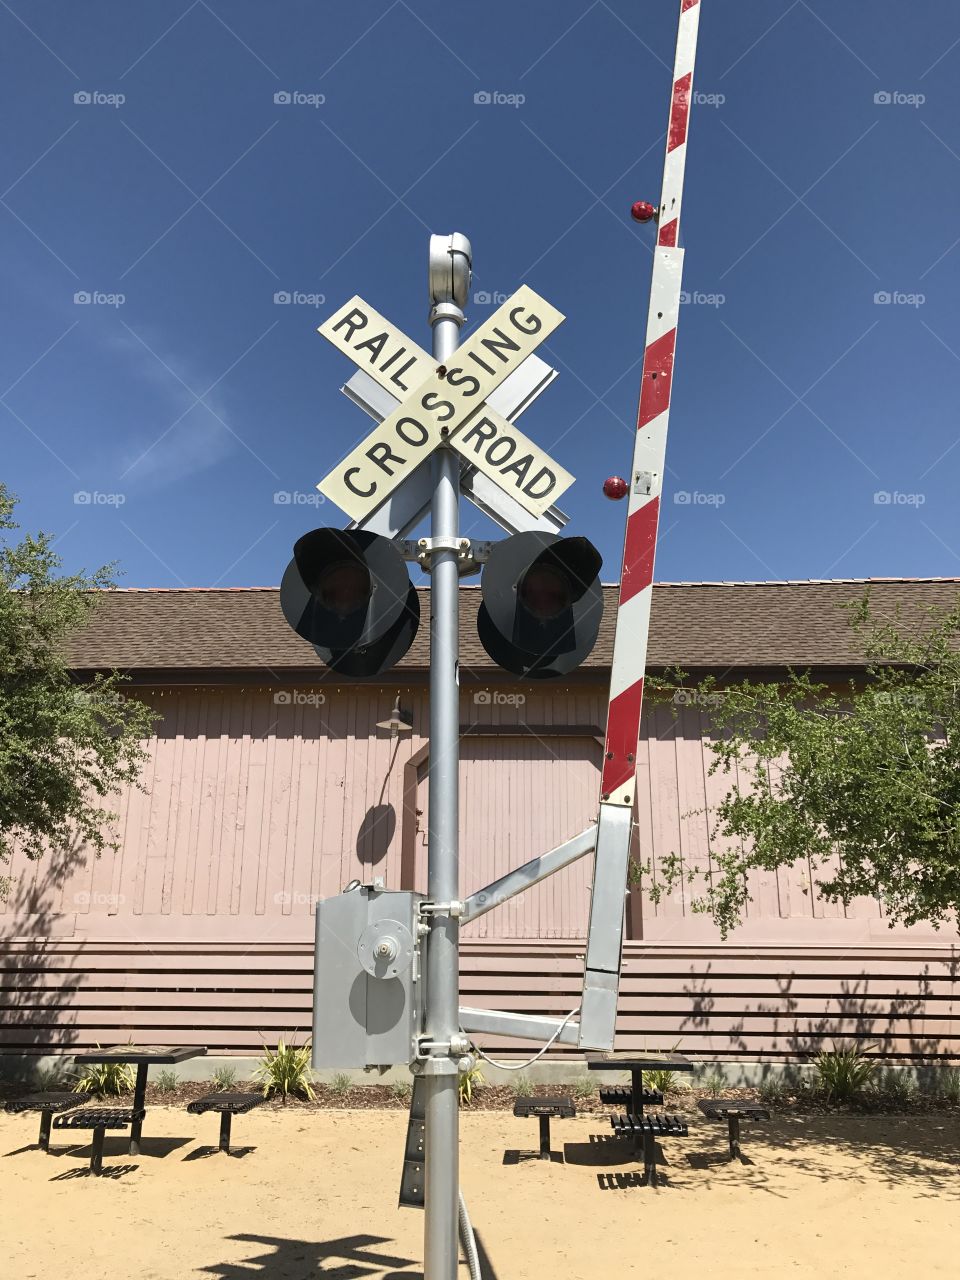 Rail road crossing